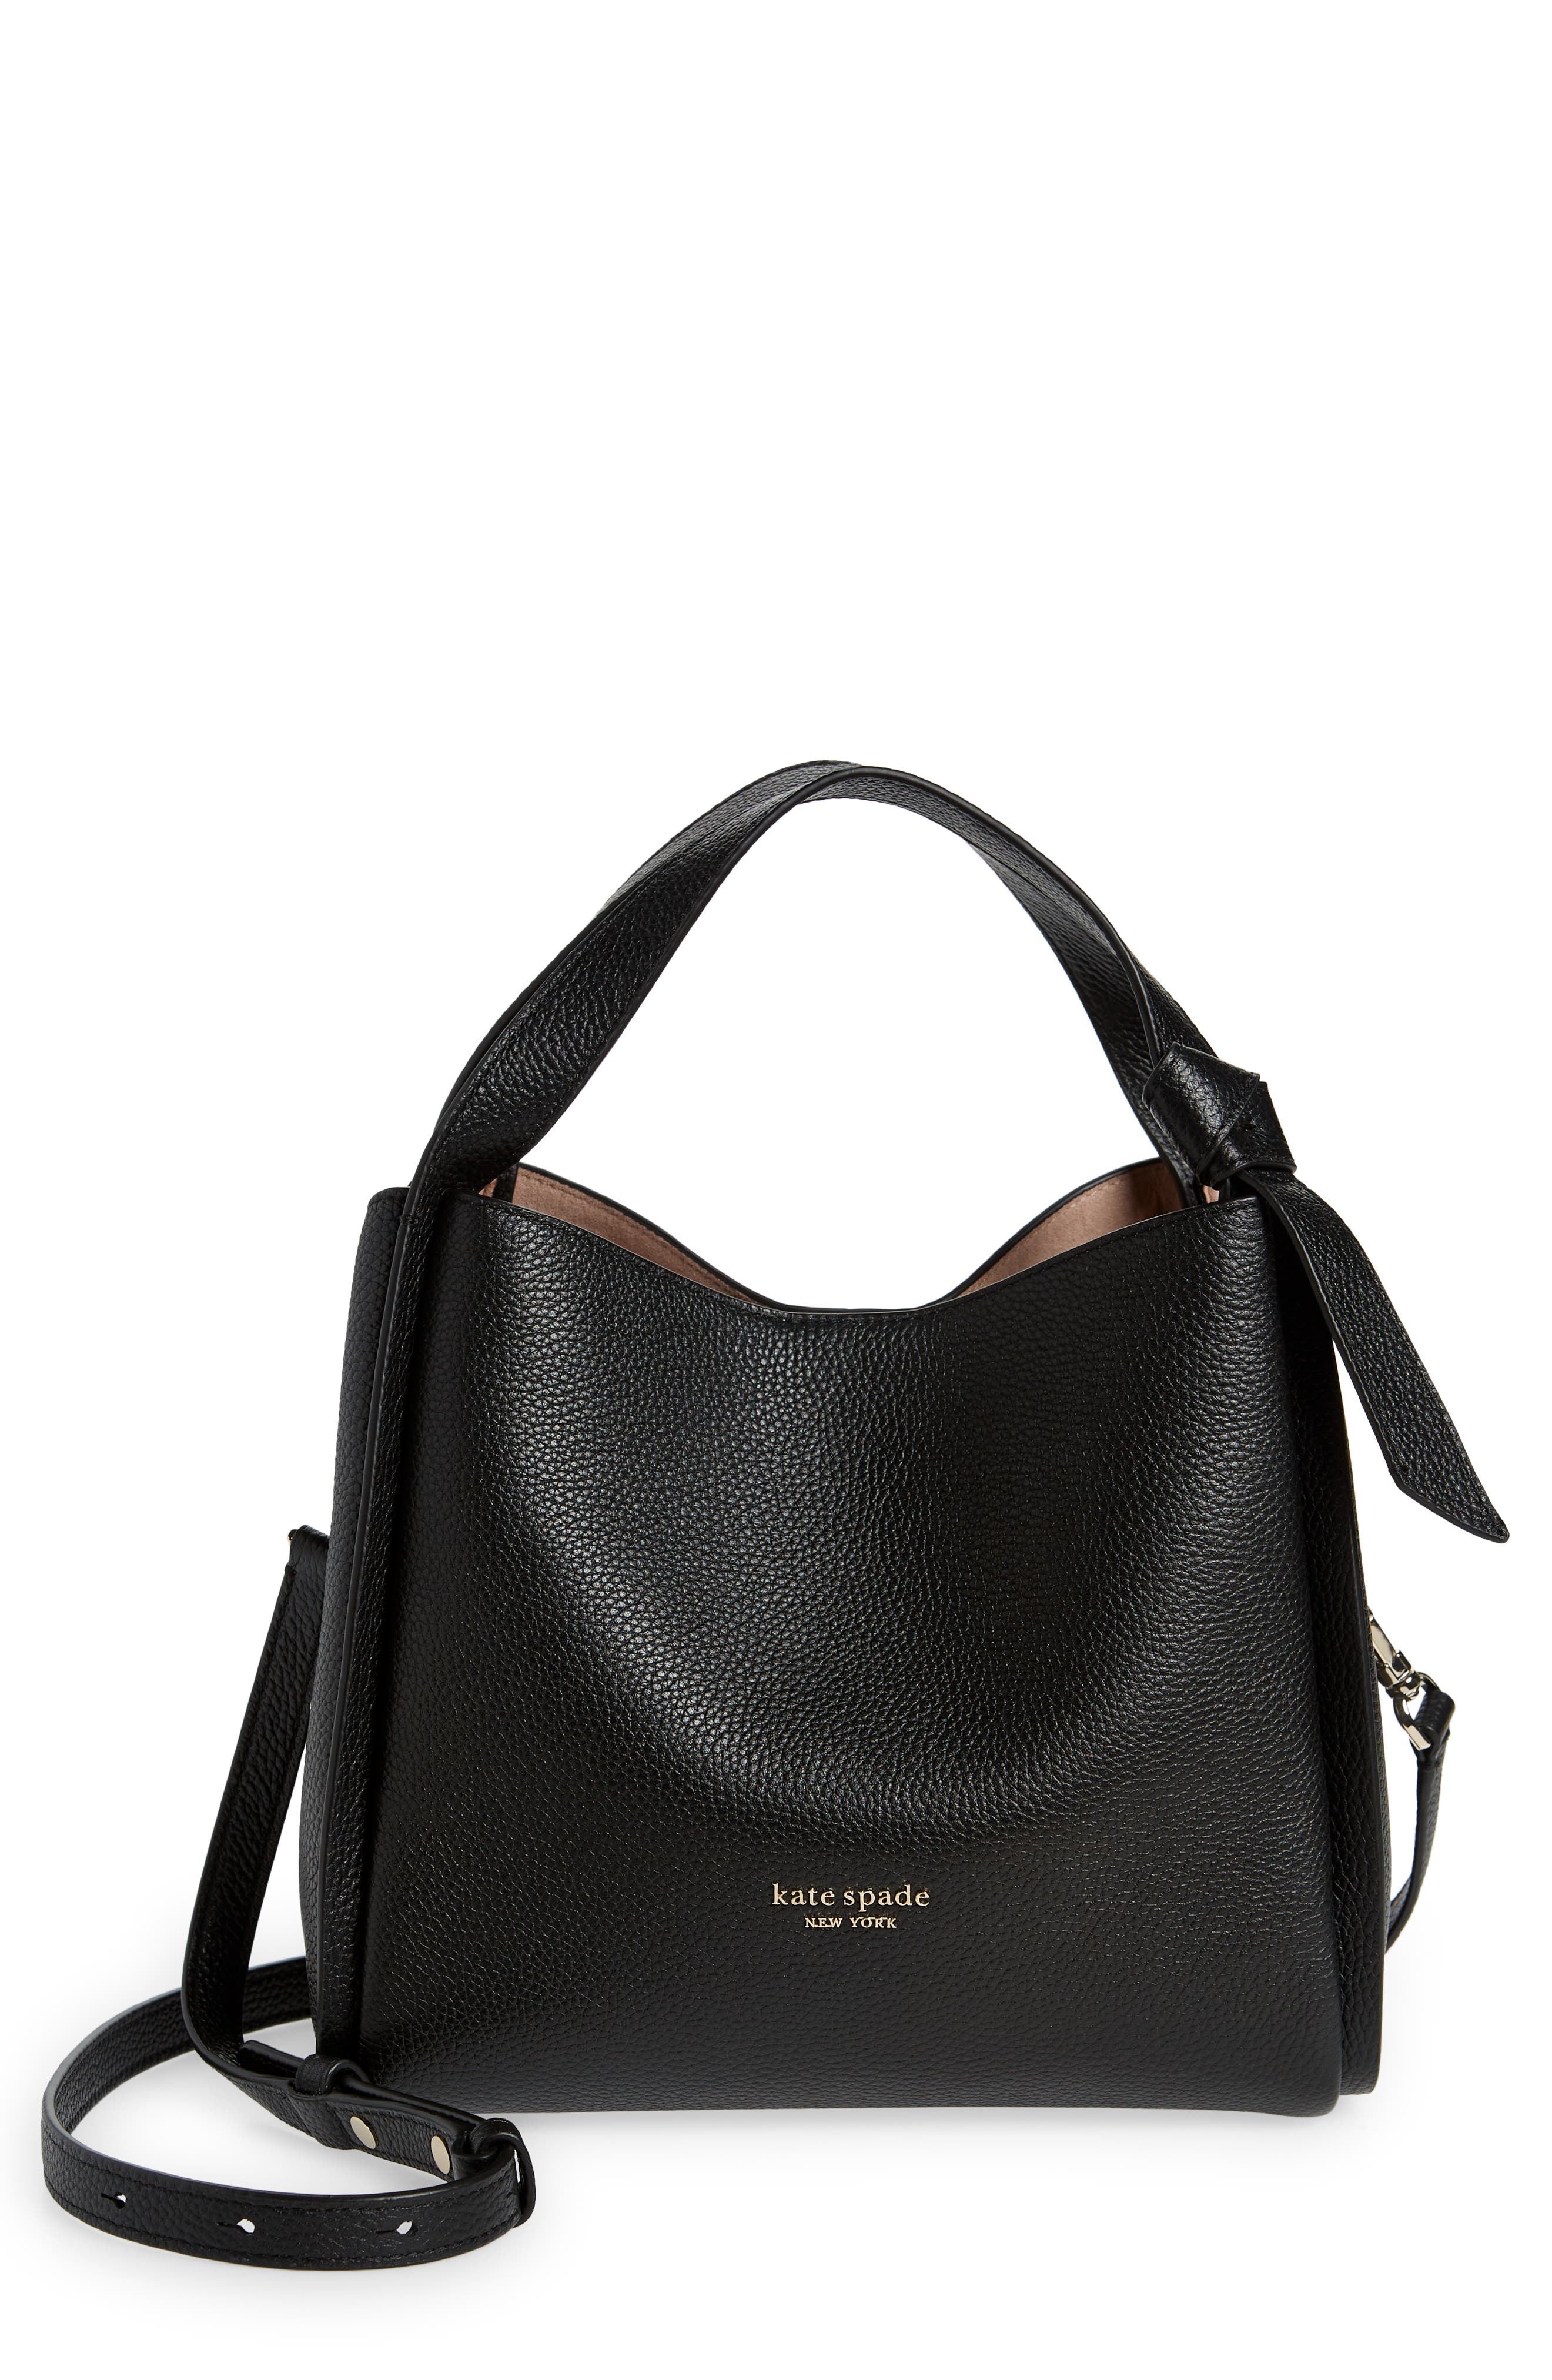 Kate spade new york Handbags, Purses & Wallets for Women   Nordstrom